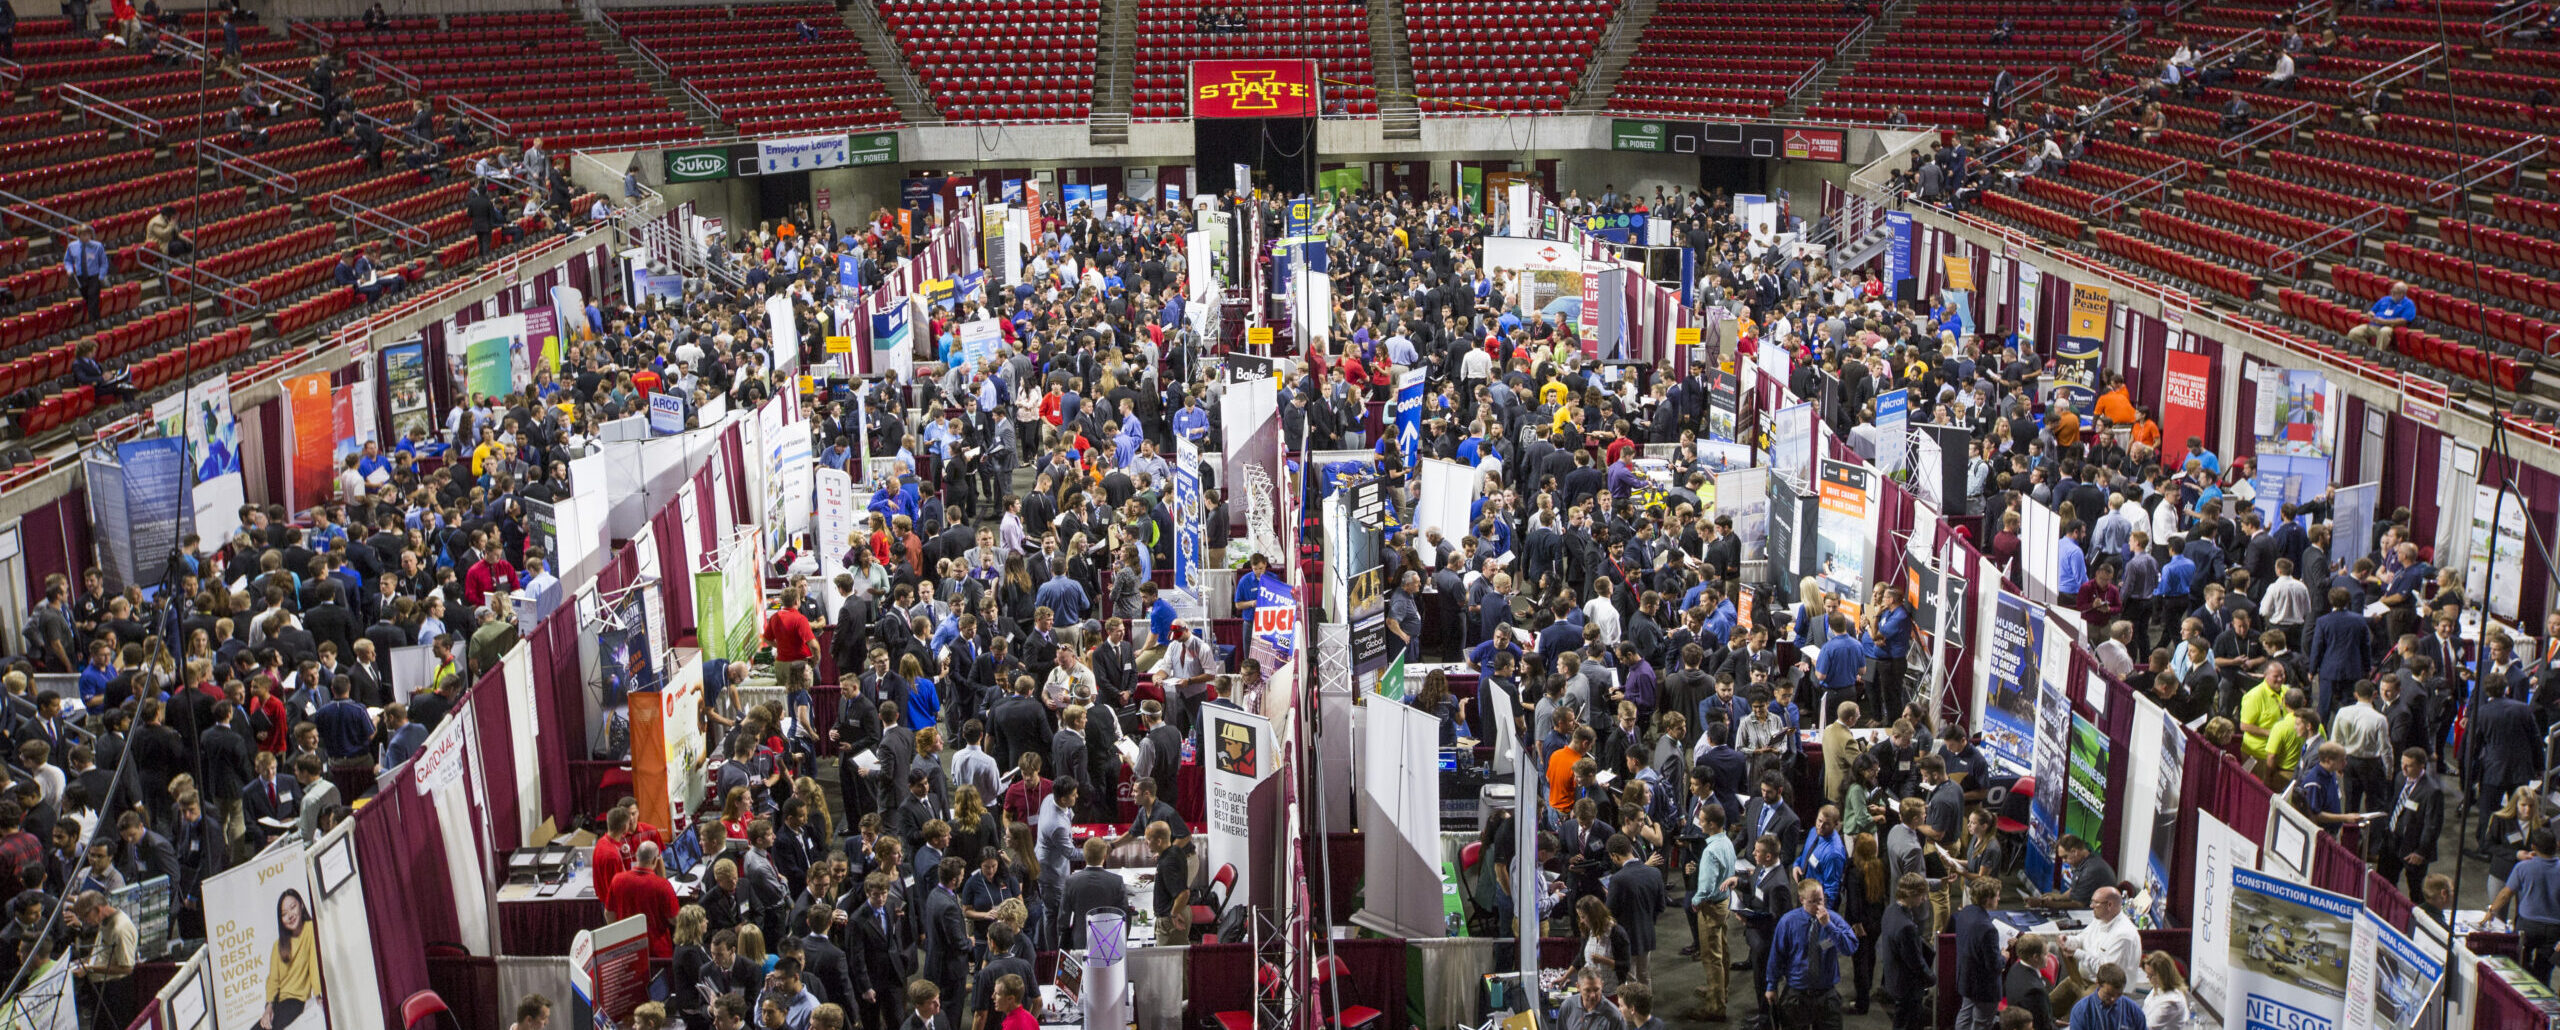 Picture of College Engineering Career Fair in Hilton Coliseum